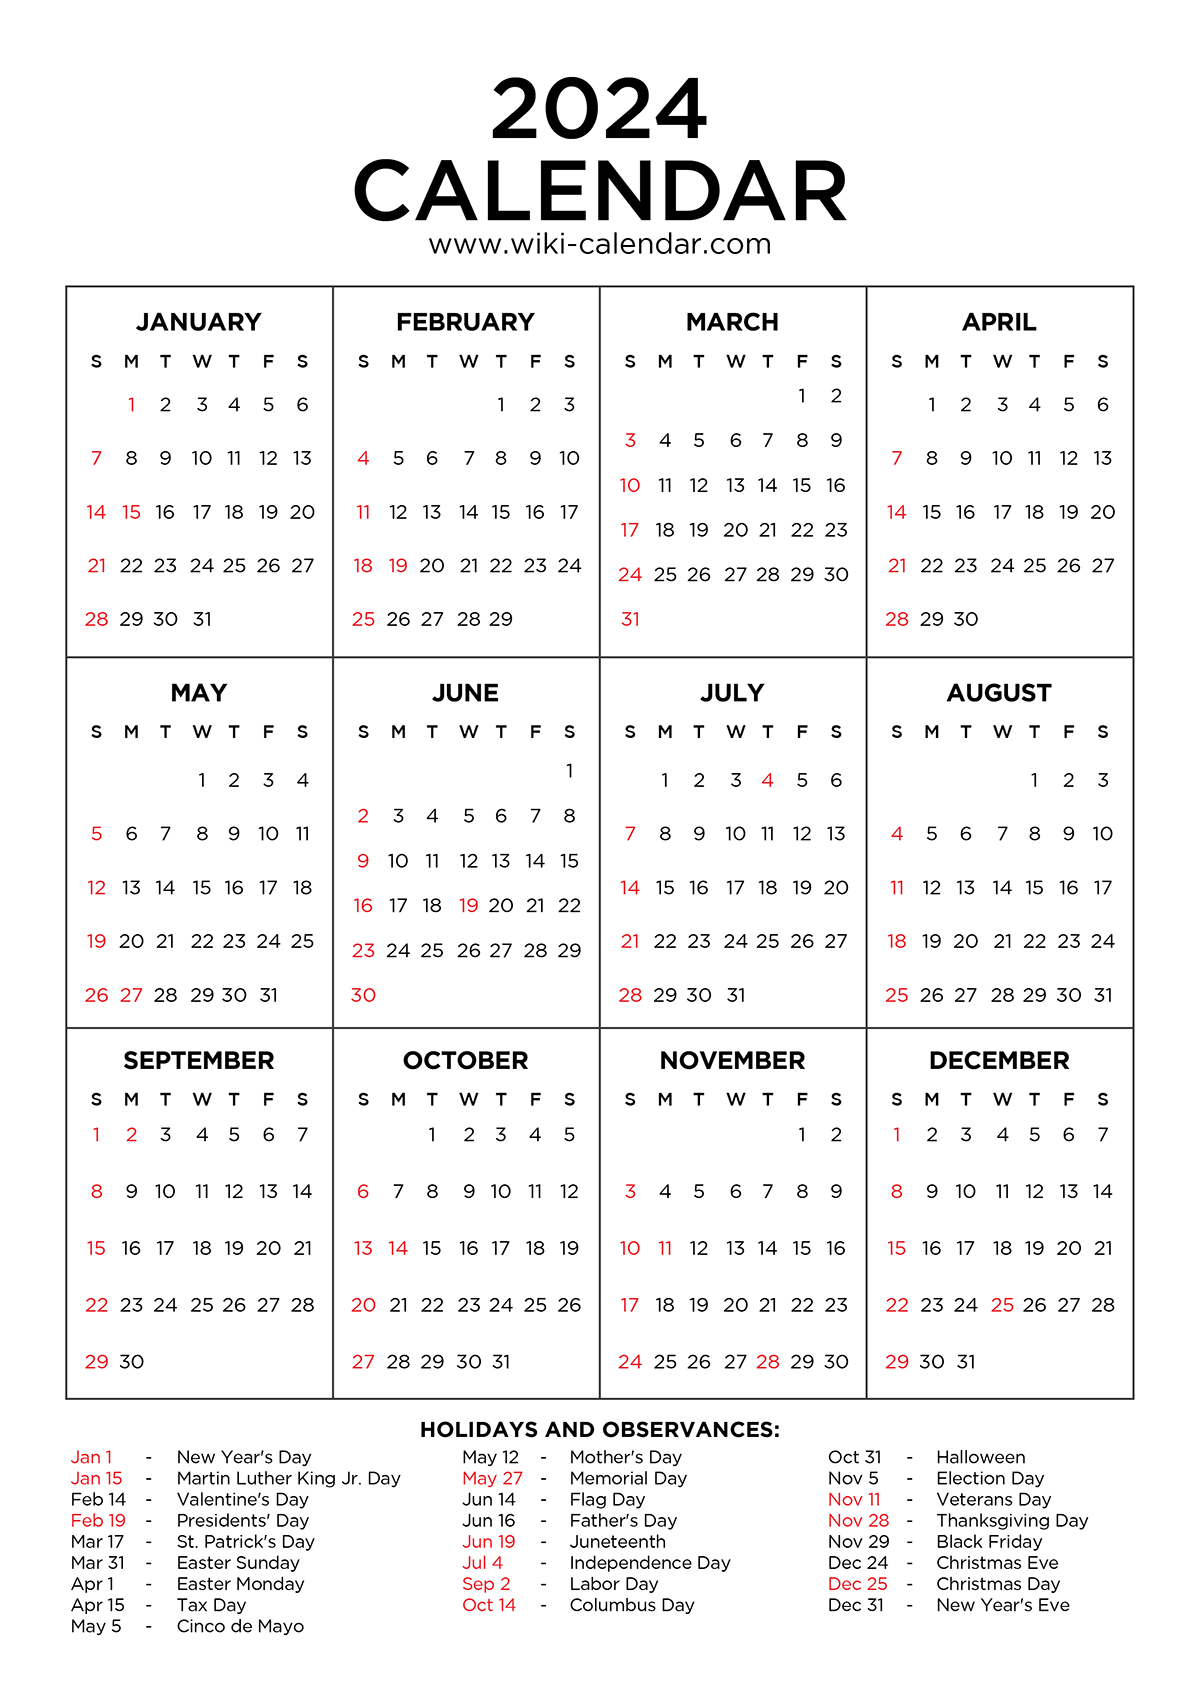 Year 2024 Calendar Printable With Holidays - Wiki Calendar for Free Printable Calendar 2024 Whole Year